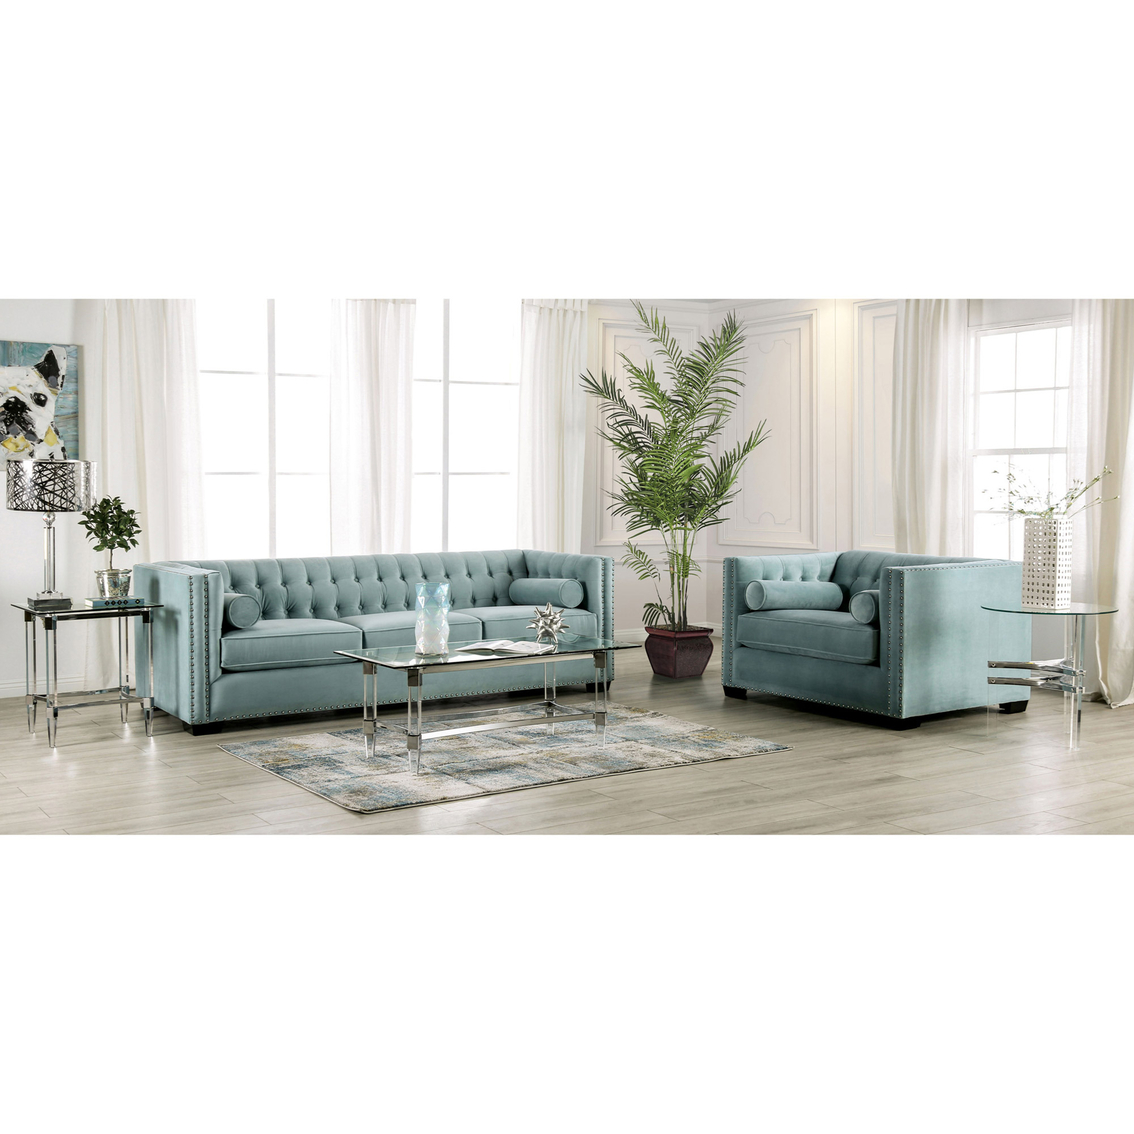 Furniture of America Elliot Teal Sofa - Image 2 of 2